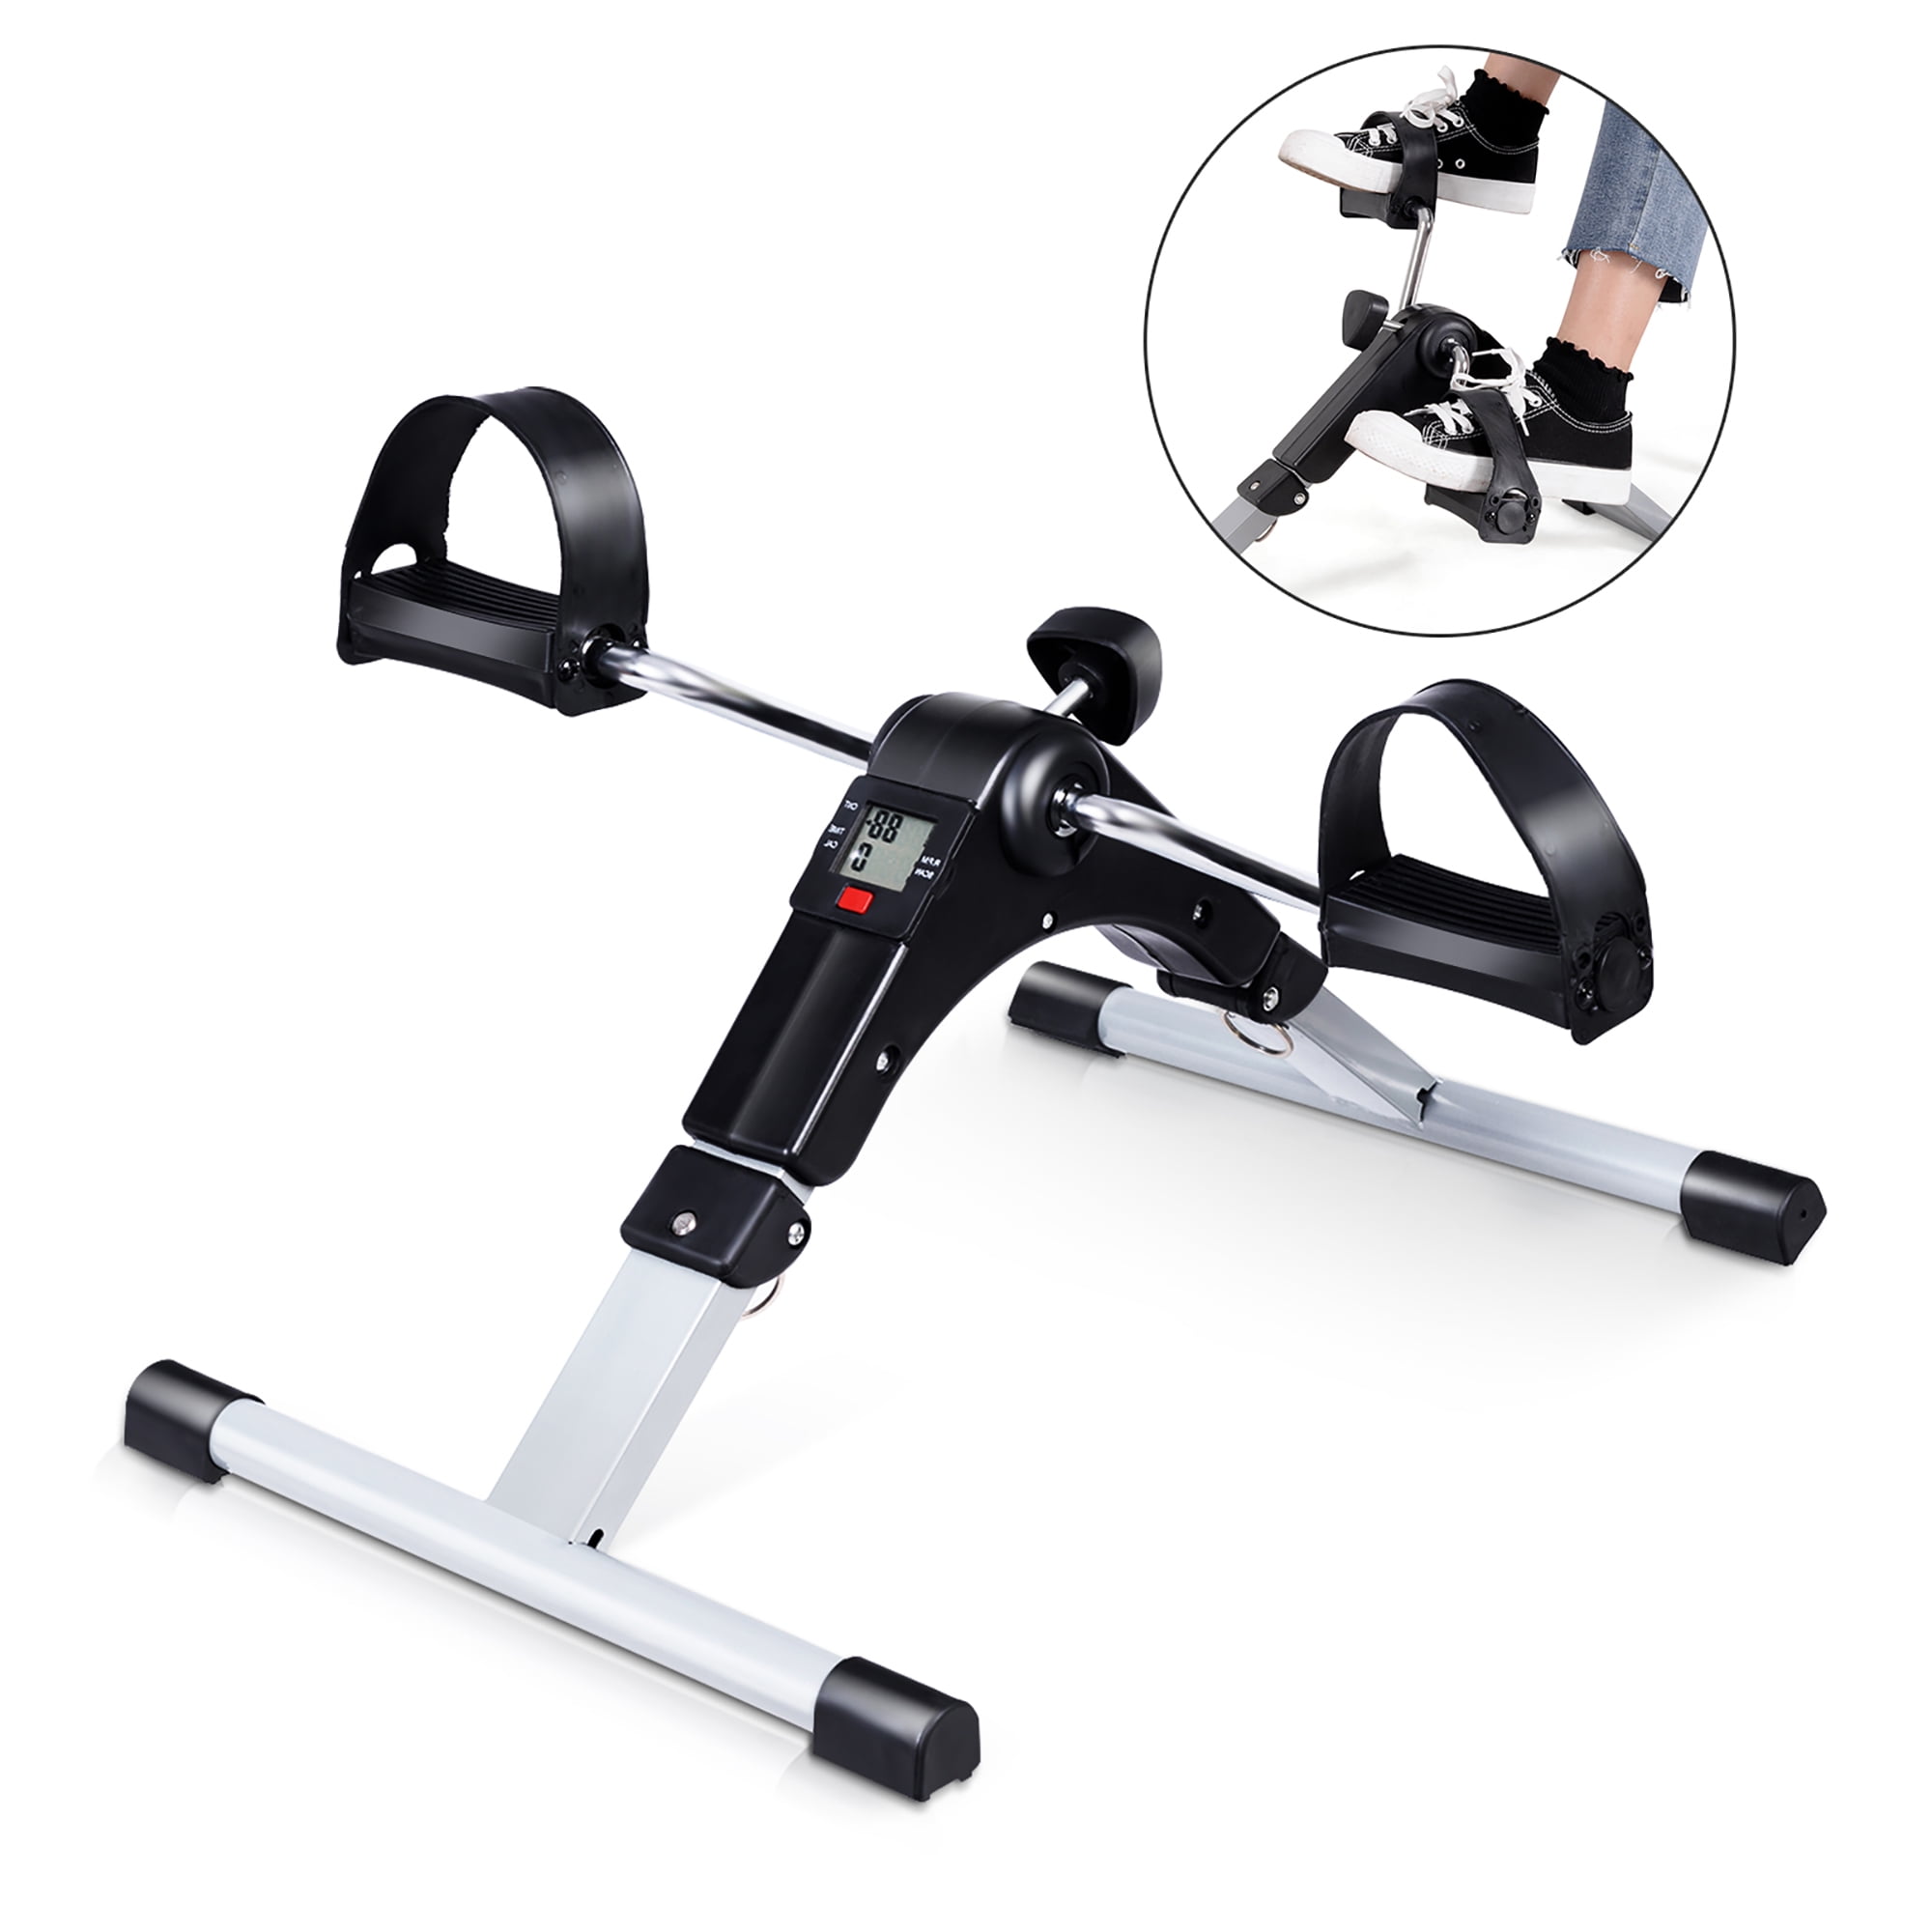 New Digital Folding Mini Exercise Arm/Leg Pedal Mobility Aid Cardio Peddler Kit